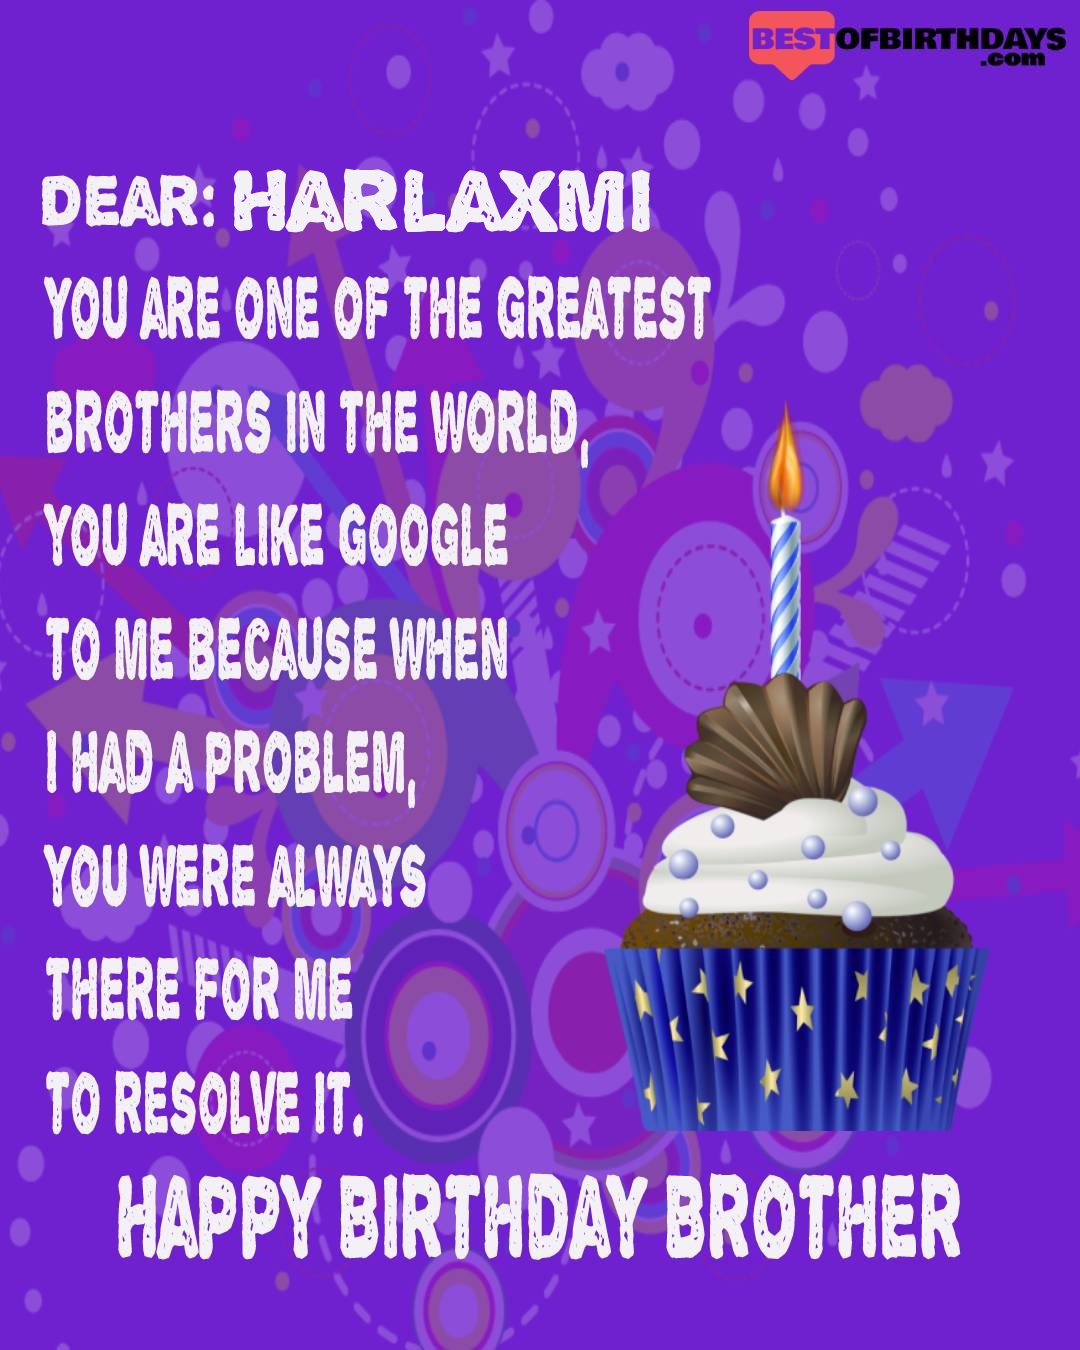 Happy birthday harlaxmi bhai brother bro